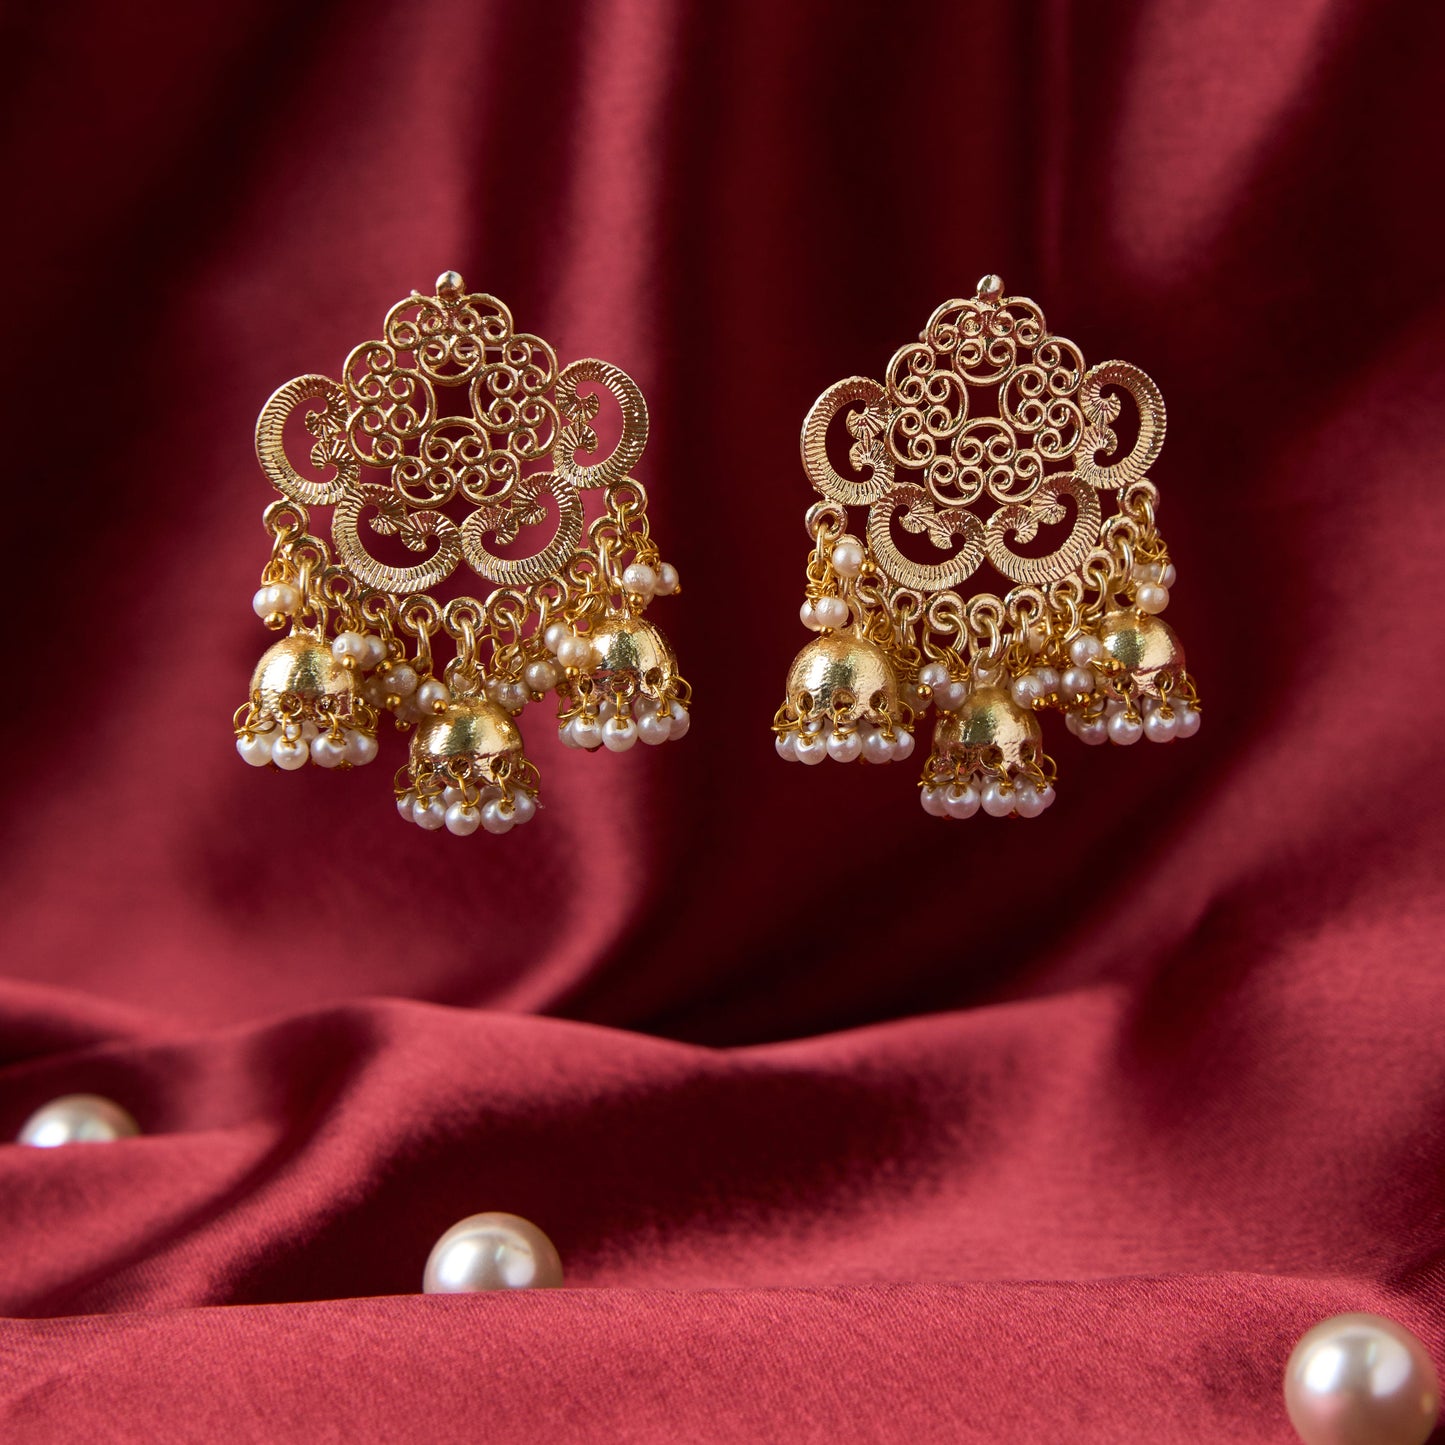 Moonstruck Traditional Indian Gold/Golden Jhumka/Jhumki Earrings With Pearls For Women - www.MoonstruckINC.com